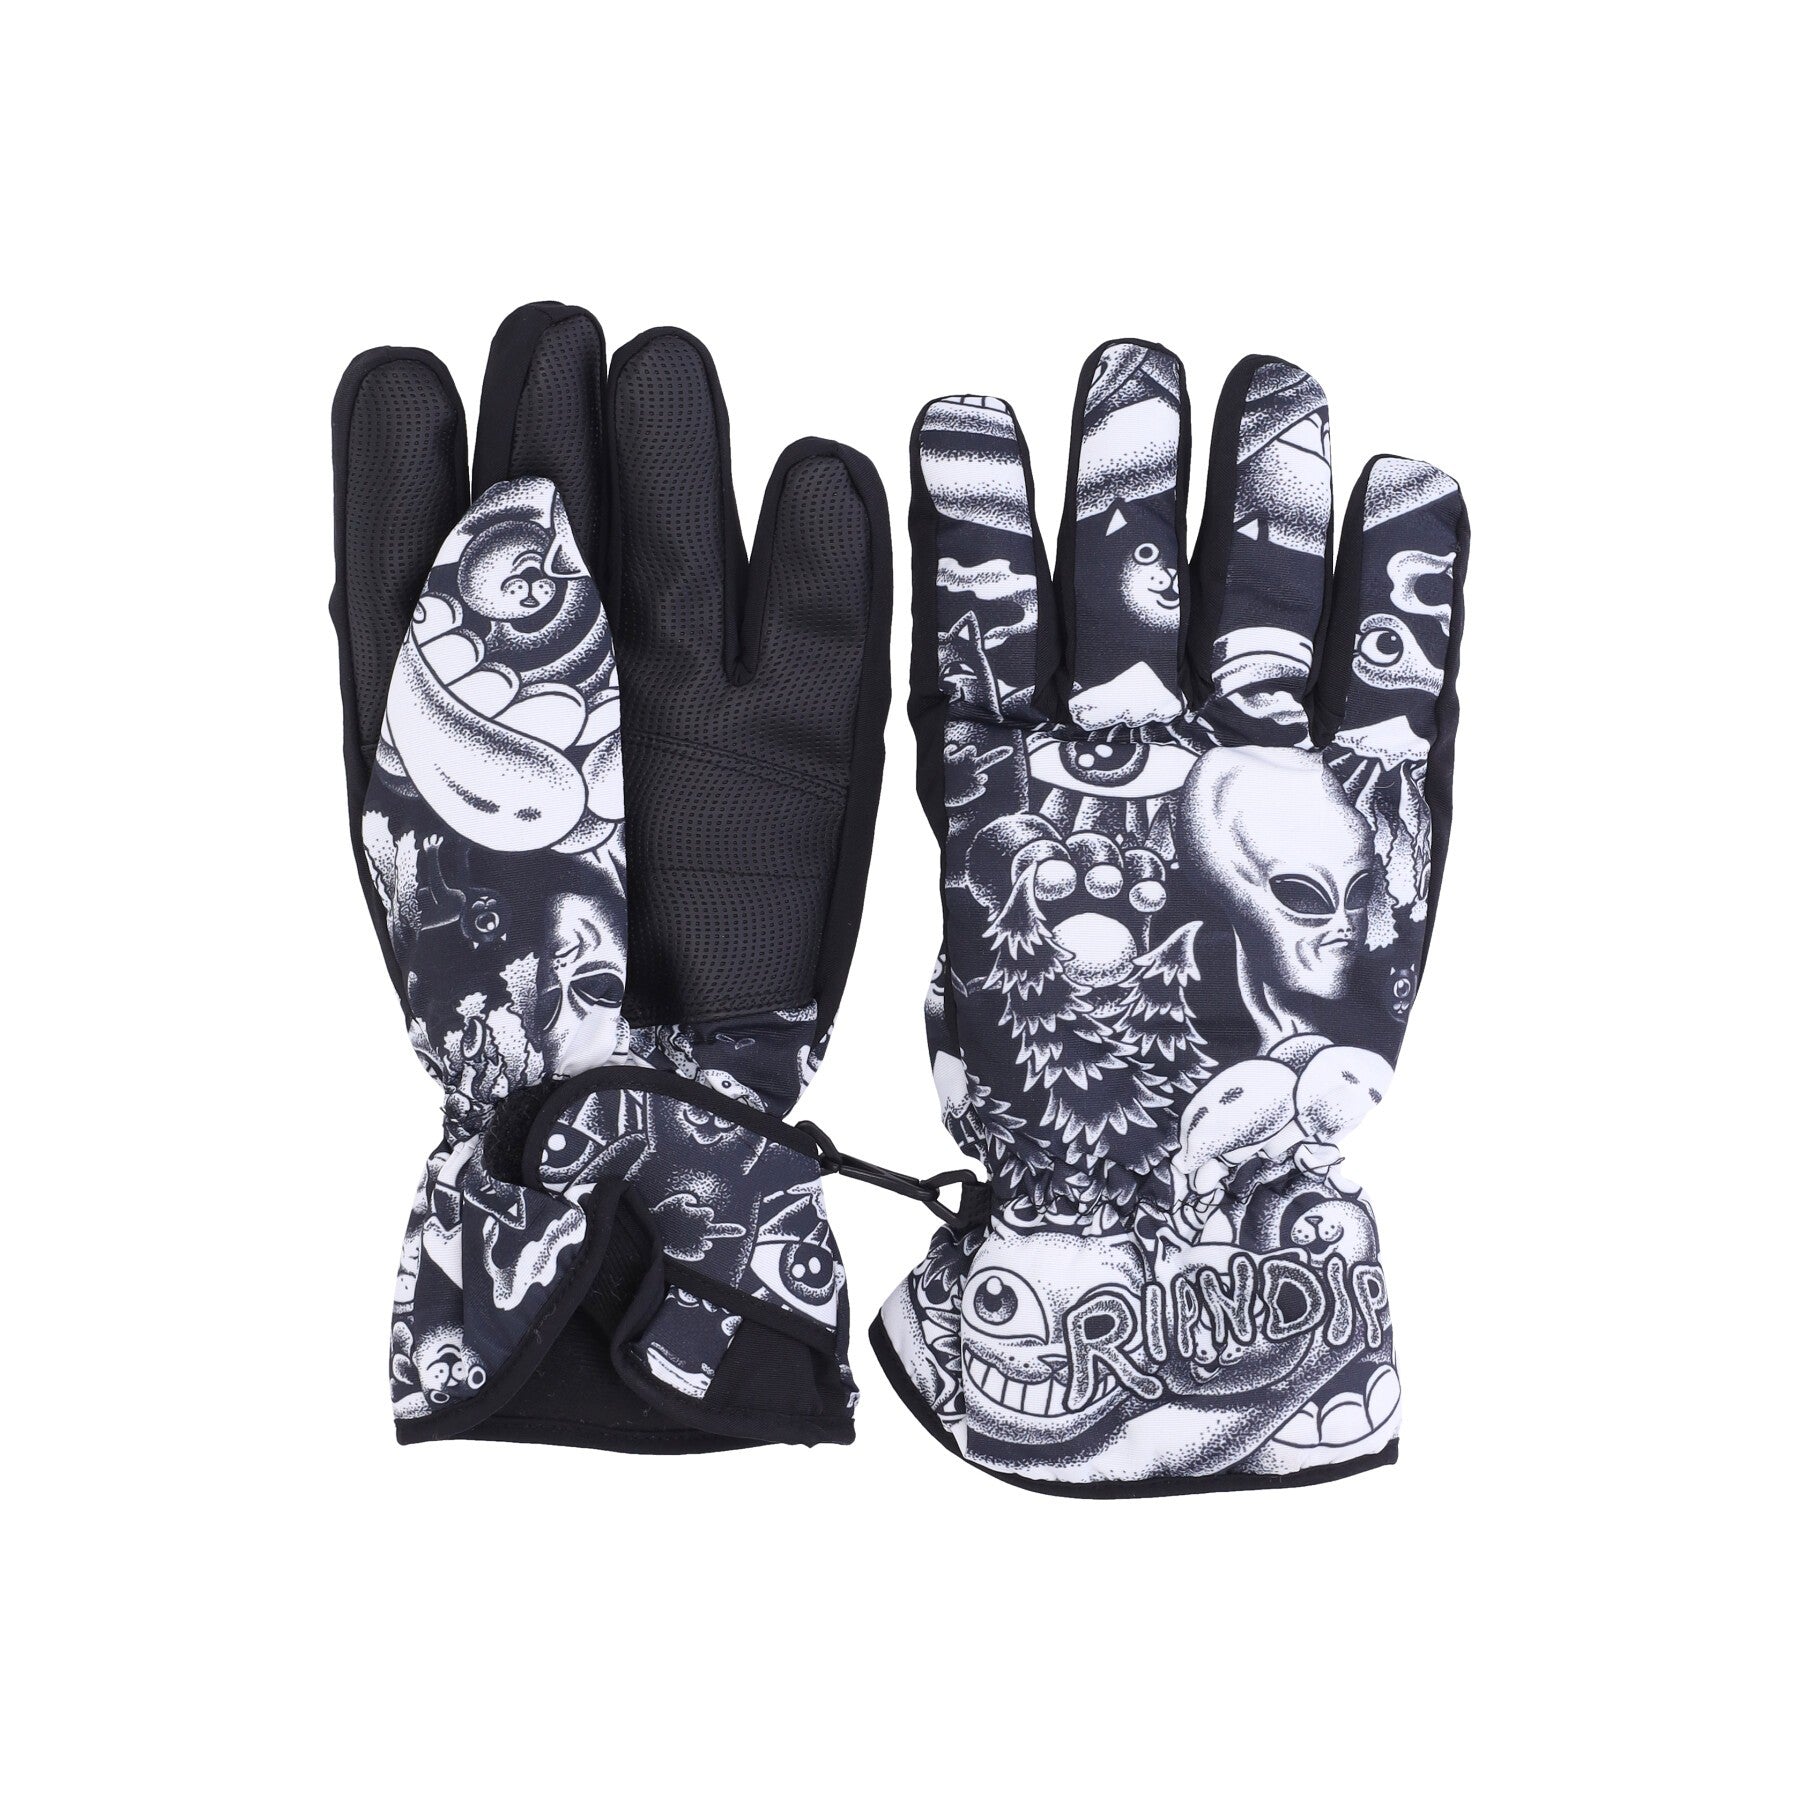 Men's Gloves Dark Twisted Fantasy Snow Gloves Black/white